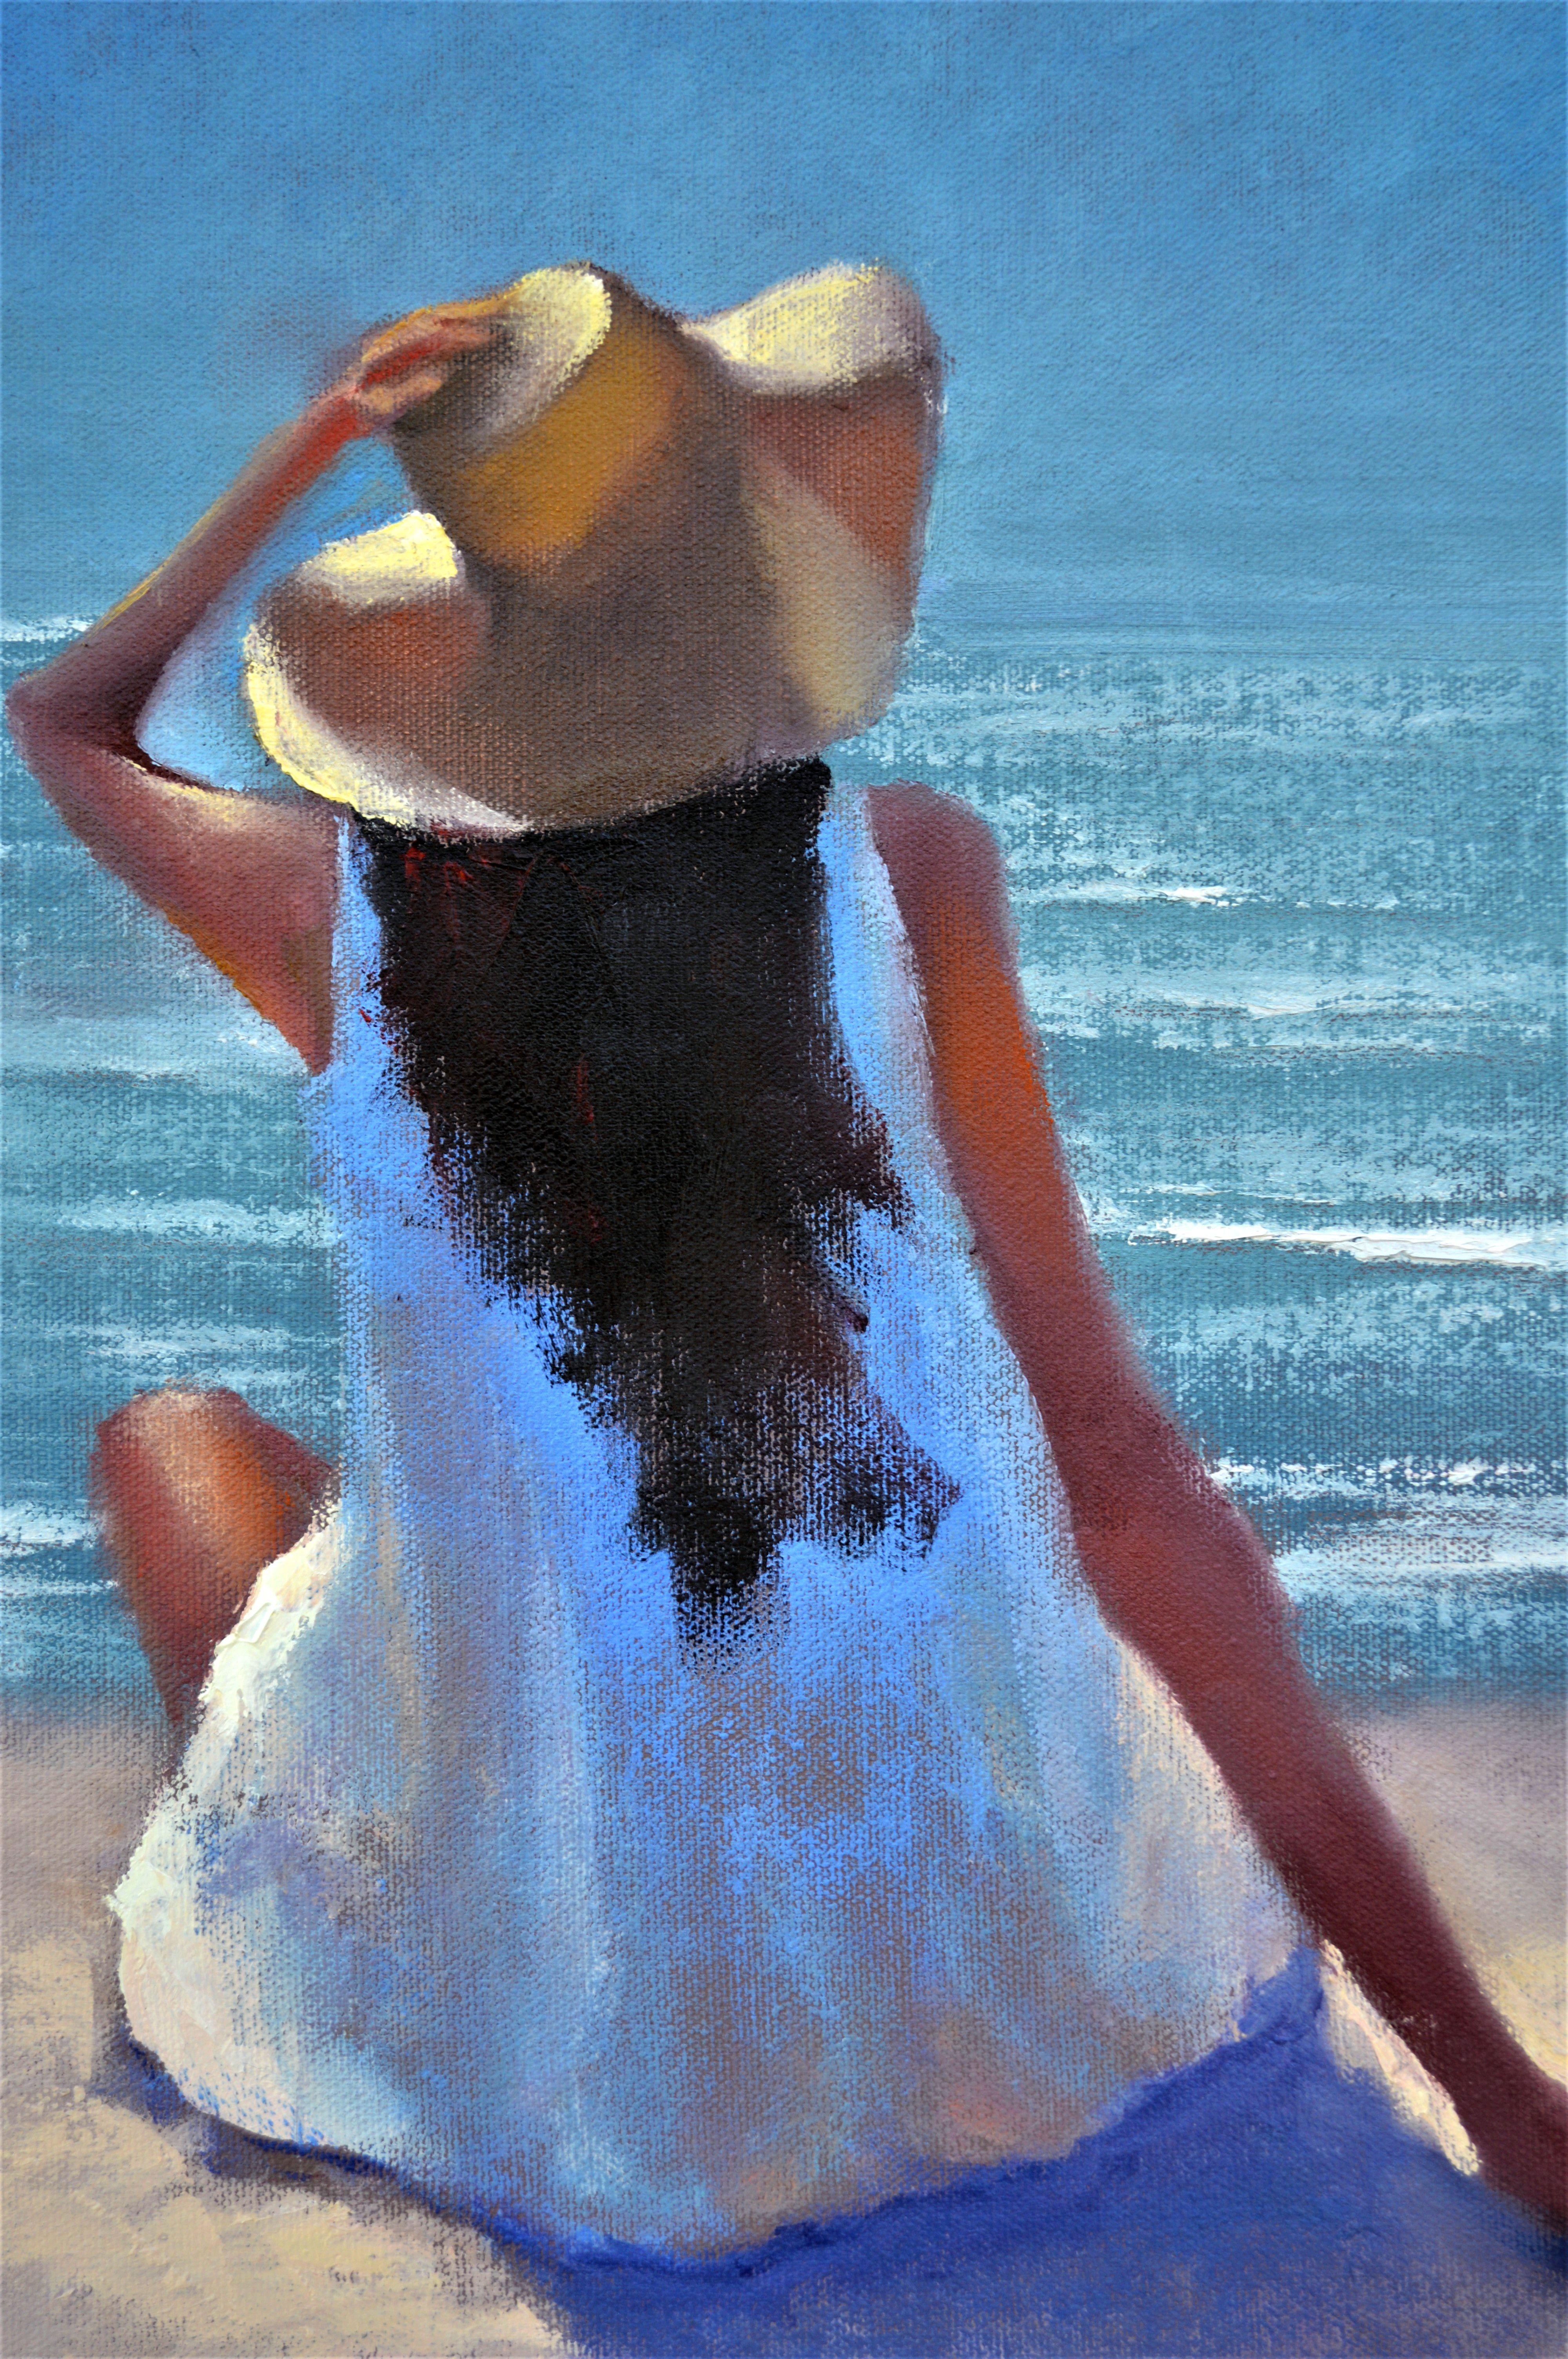 Summer, sea, beach - Painting by Elena Lukina